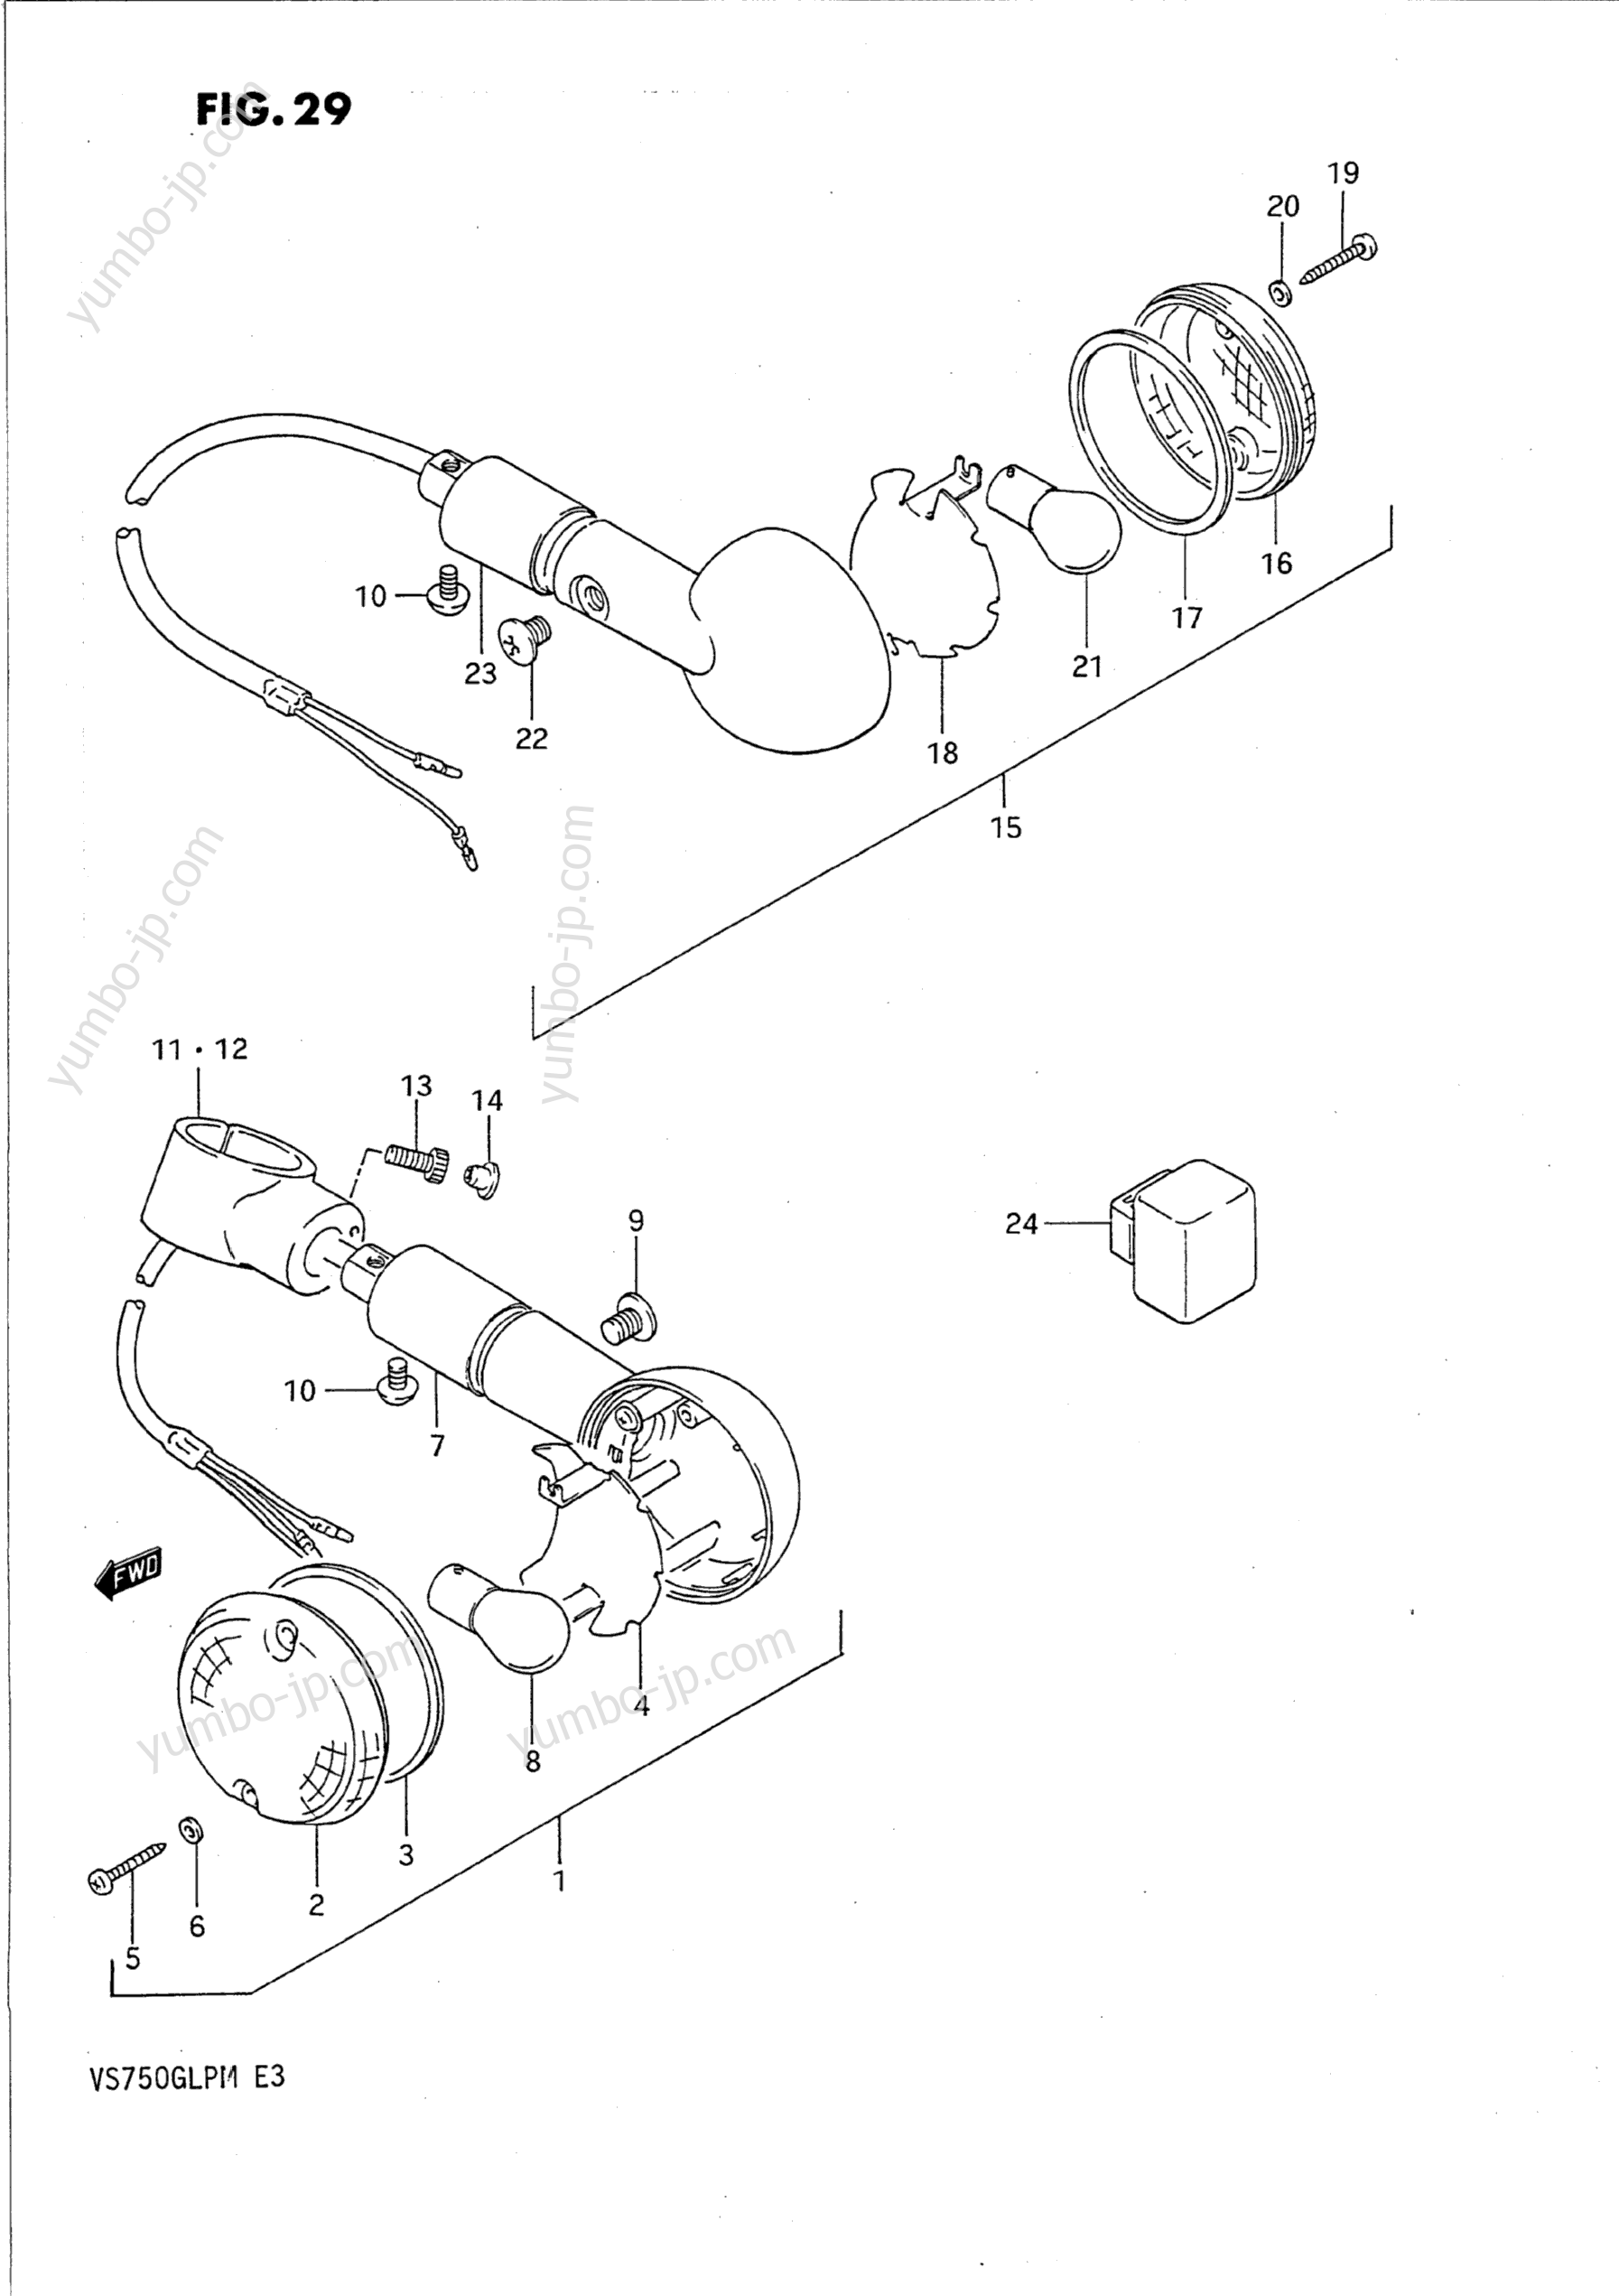 TURN SIGNAL LAMP for motorcycles SUZUKI Intruder (VS750GLP) 1991 year